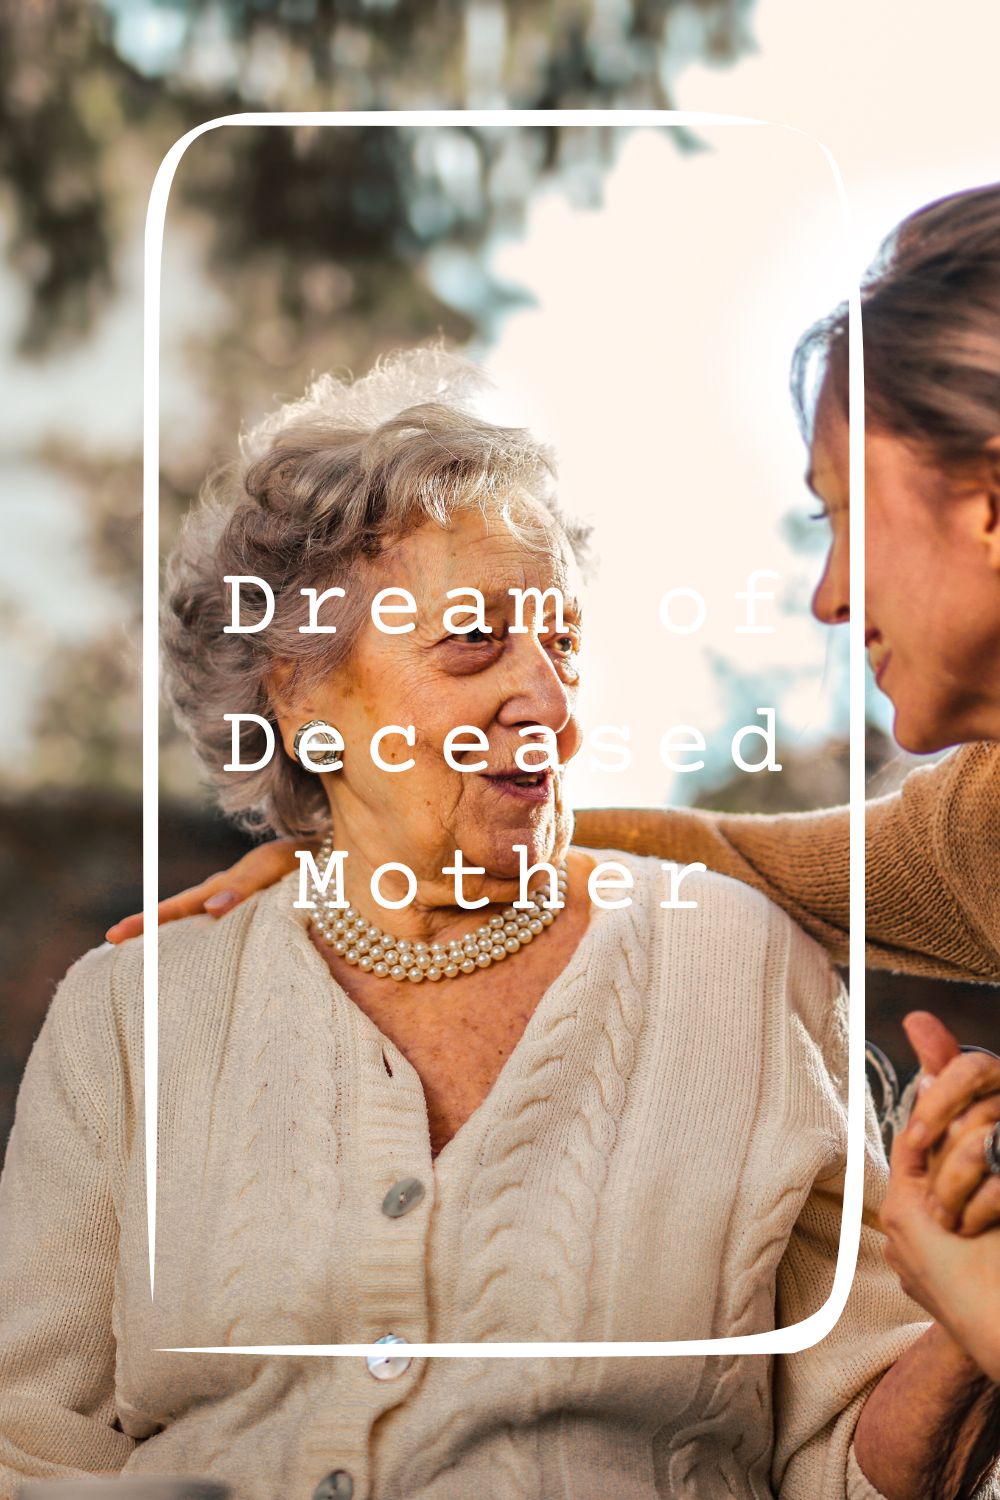 12 Dream of Deceased Mother Meanings1